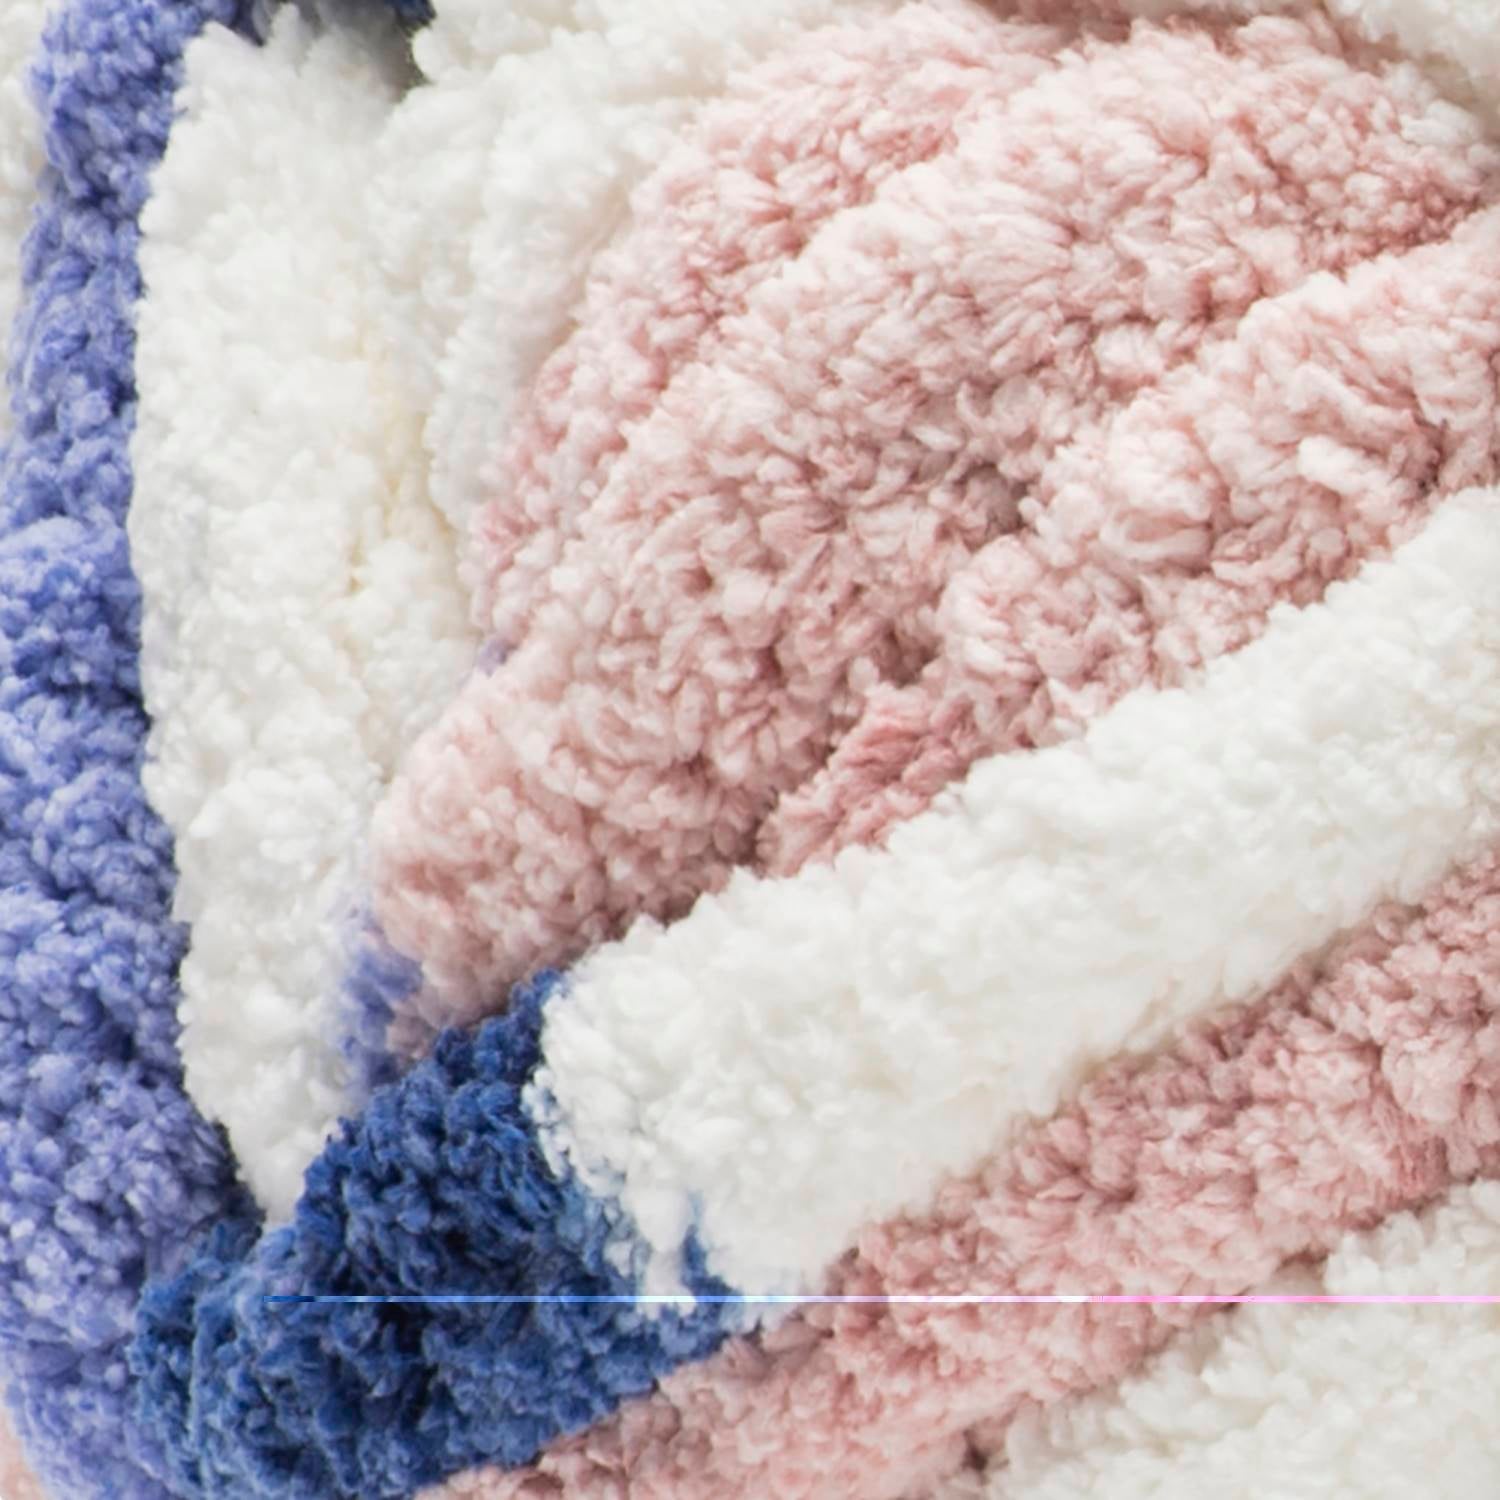  Bernat Blanket Extra Thick Clay Yarn - 1 Pack of 600g/21oz -  Polyester - 7 Jumbo - Knitting, Crocheting, Crafts & Amigurumi, Chunky  Chenille Yarn : Everything Else